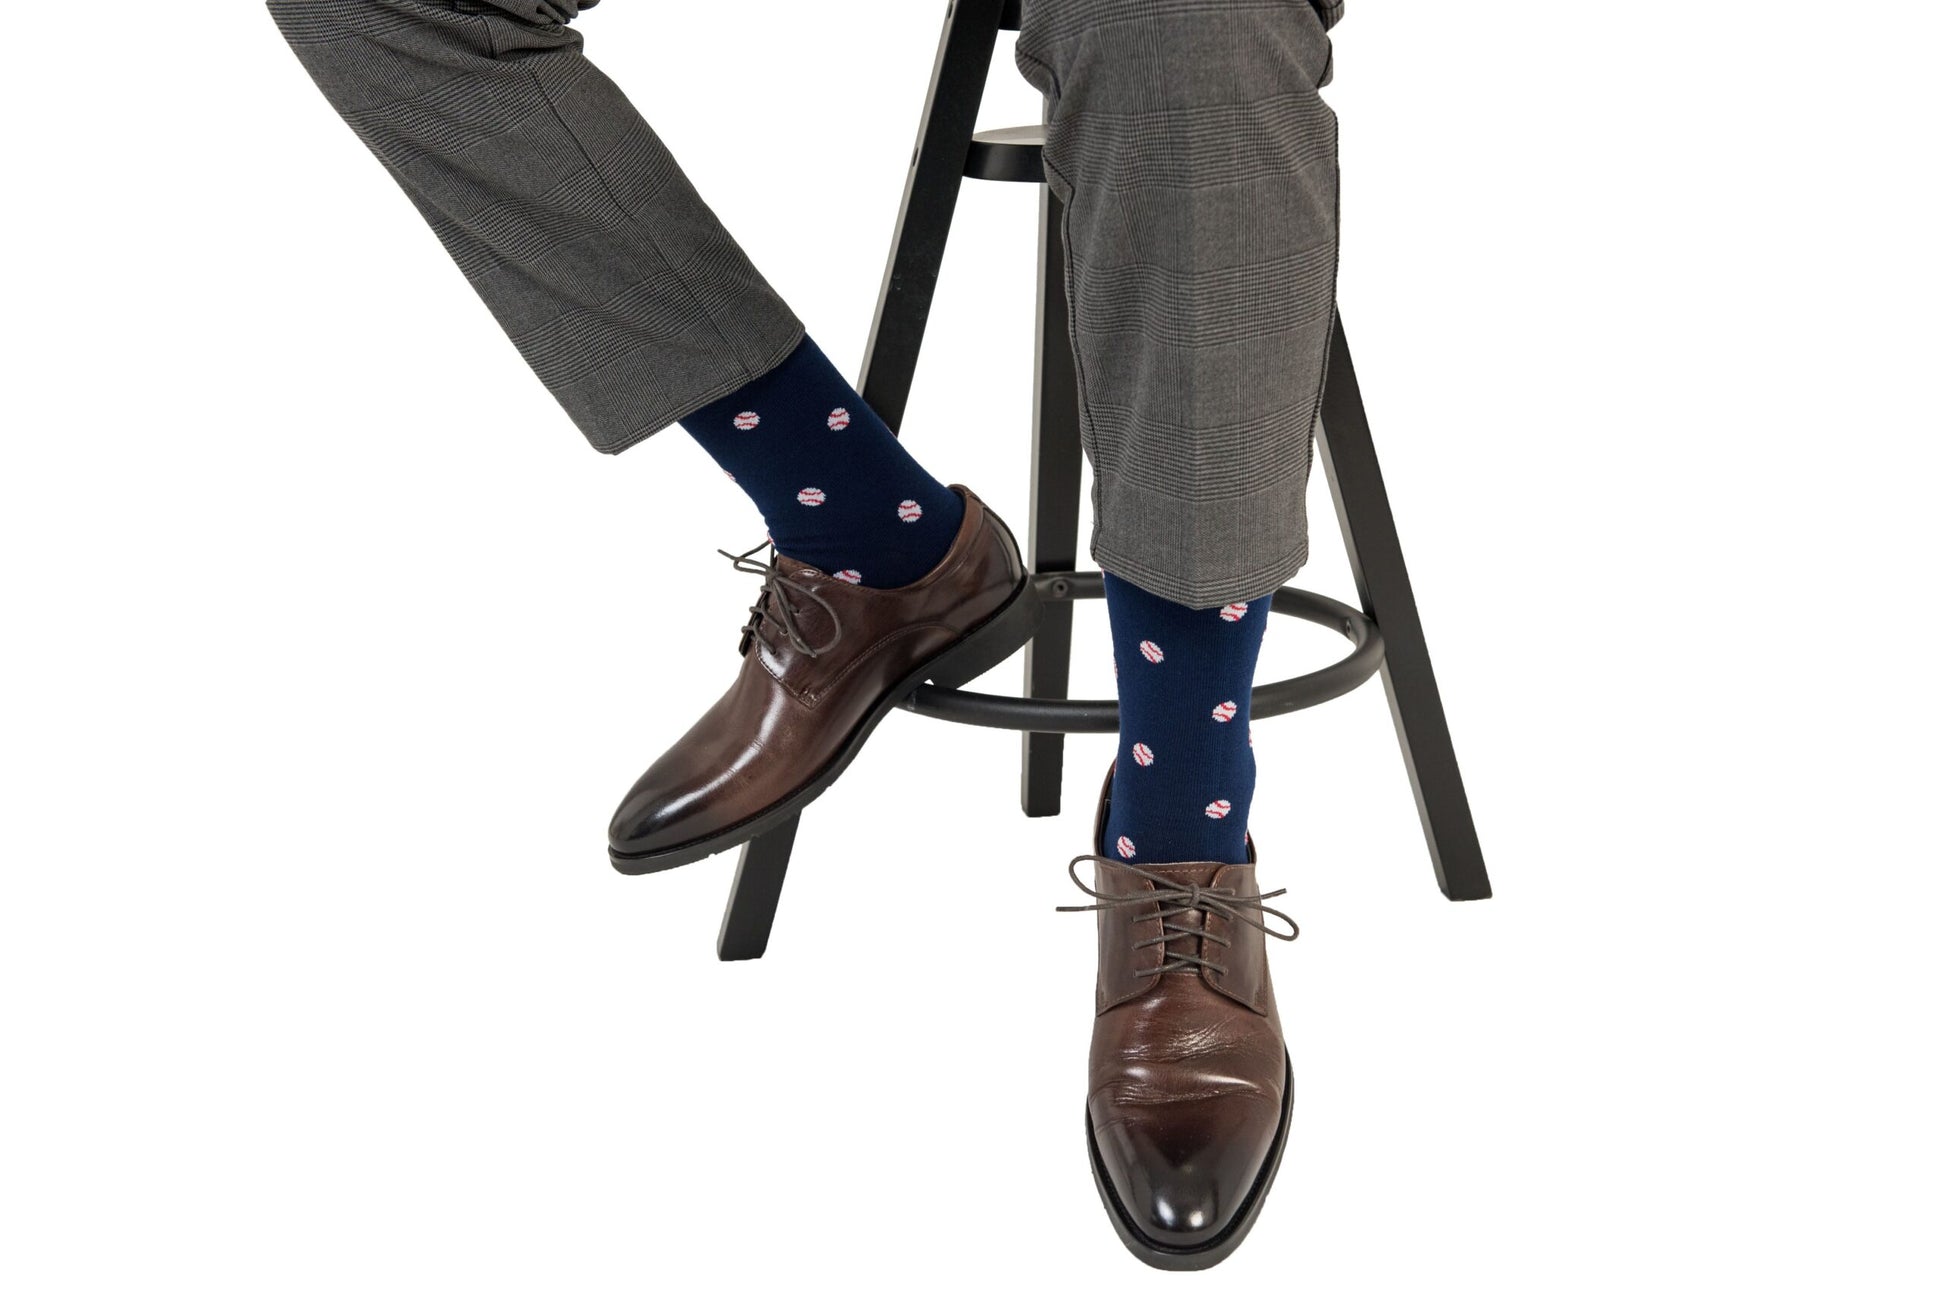 A man sitting on a stool wearing baseball socks.